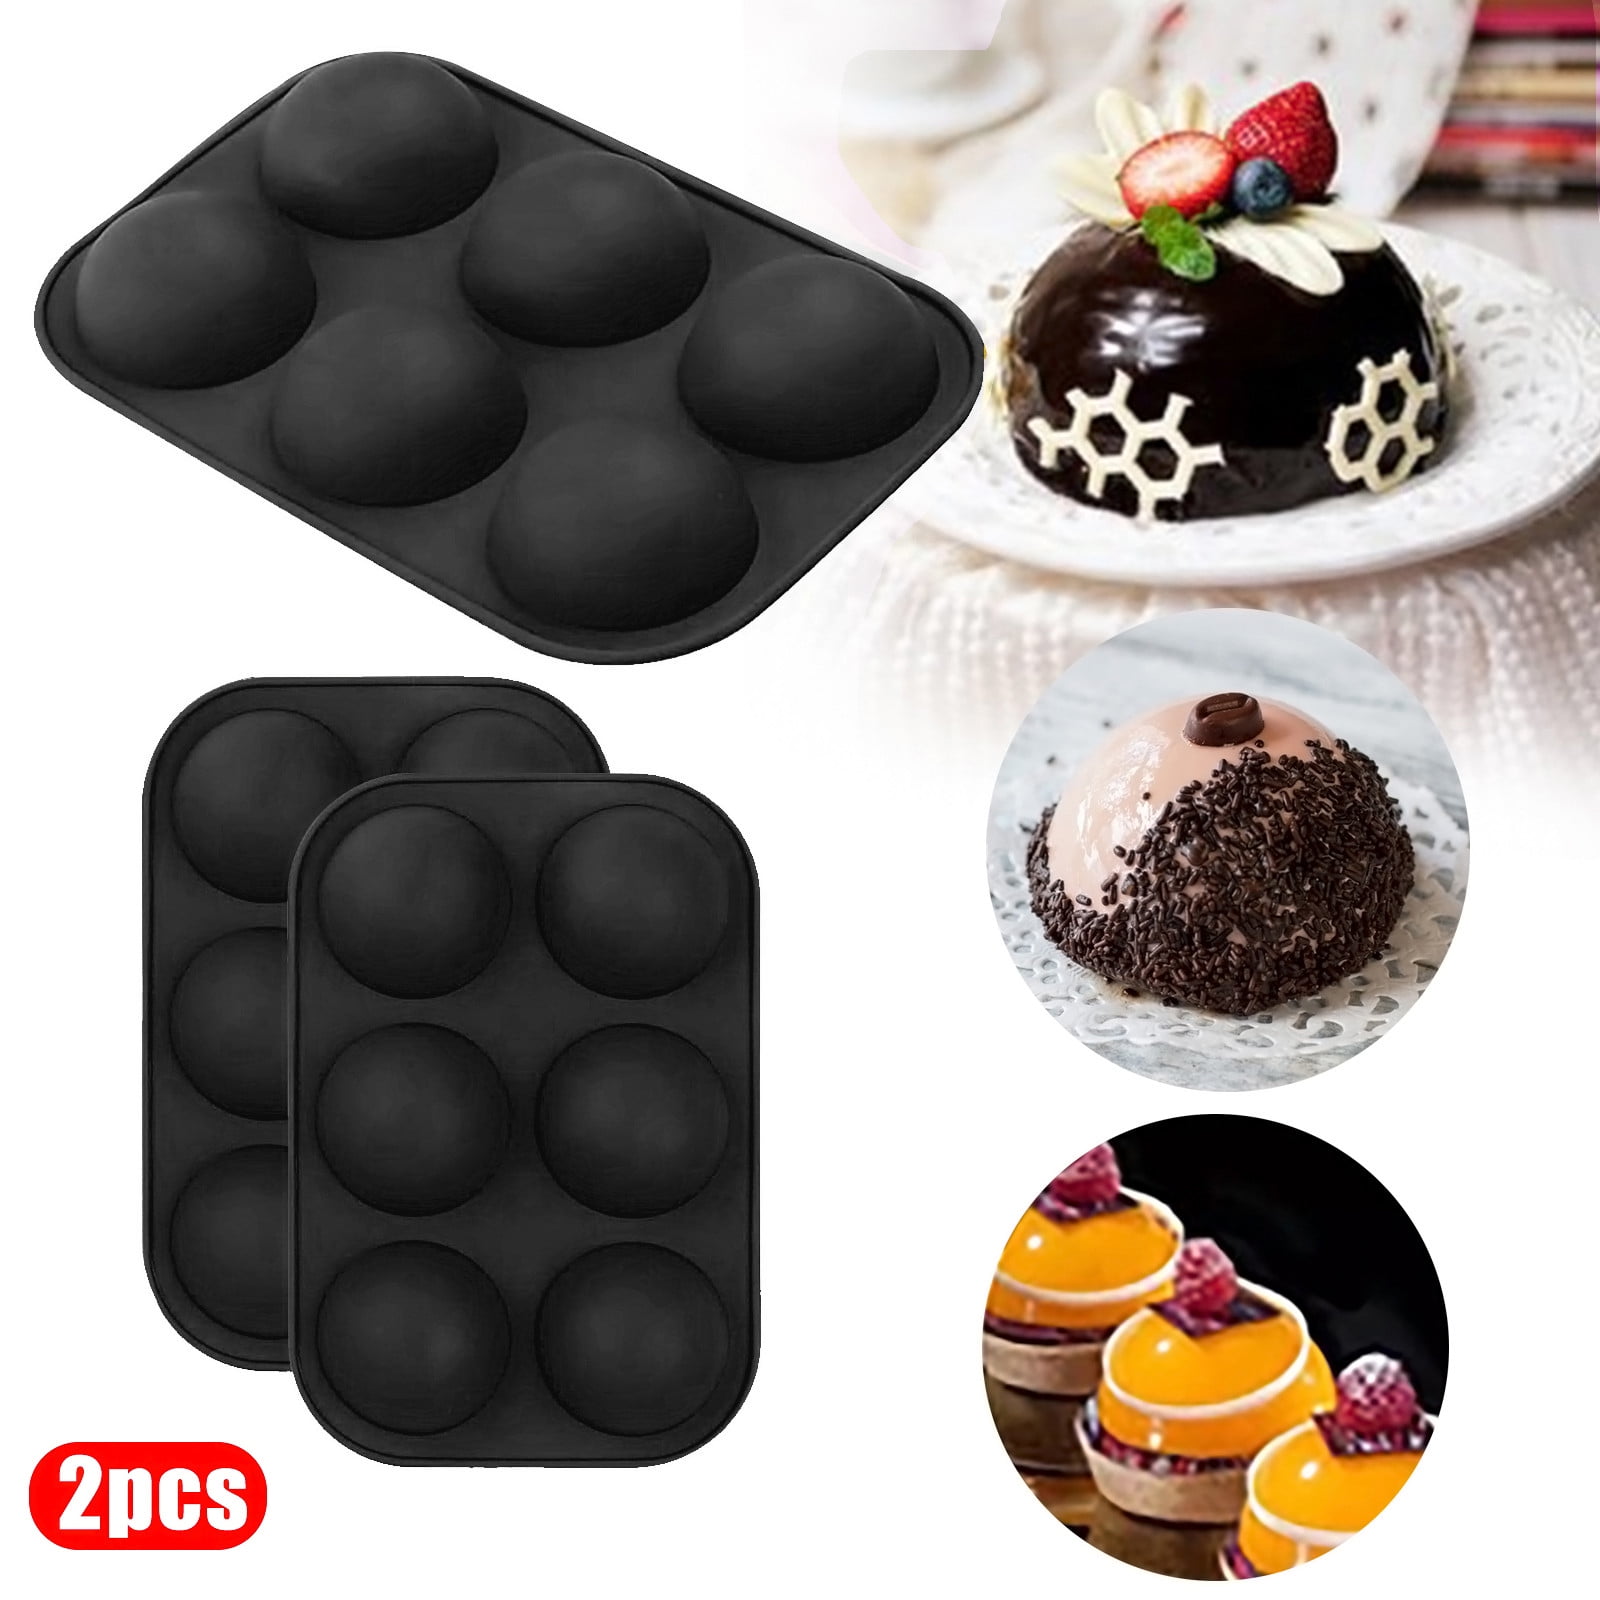 2pcs 6 Cavity Half Ball 2" Sphere Silicone Cake Muffin Chocolate Baking Pan Mold 